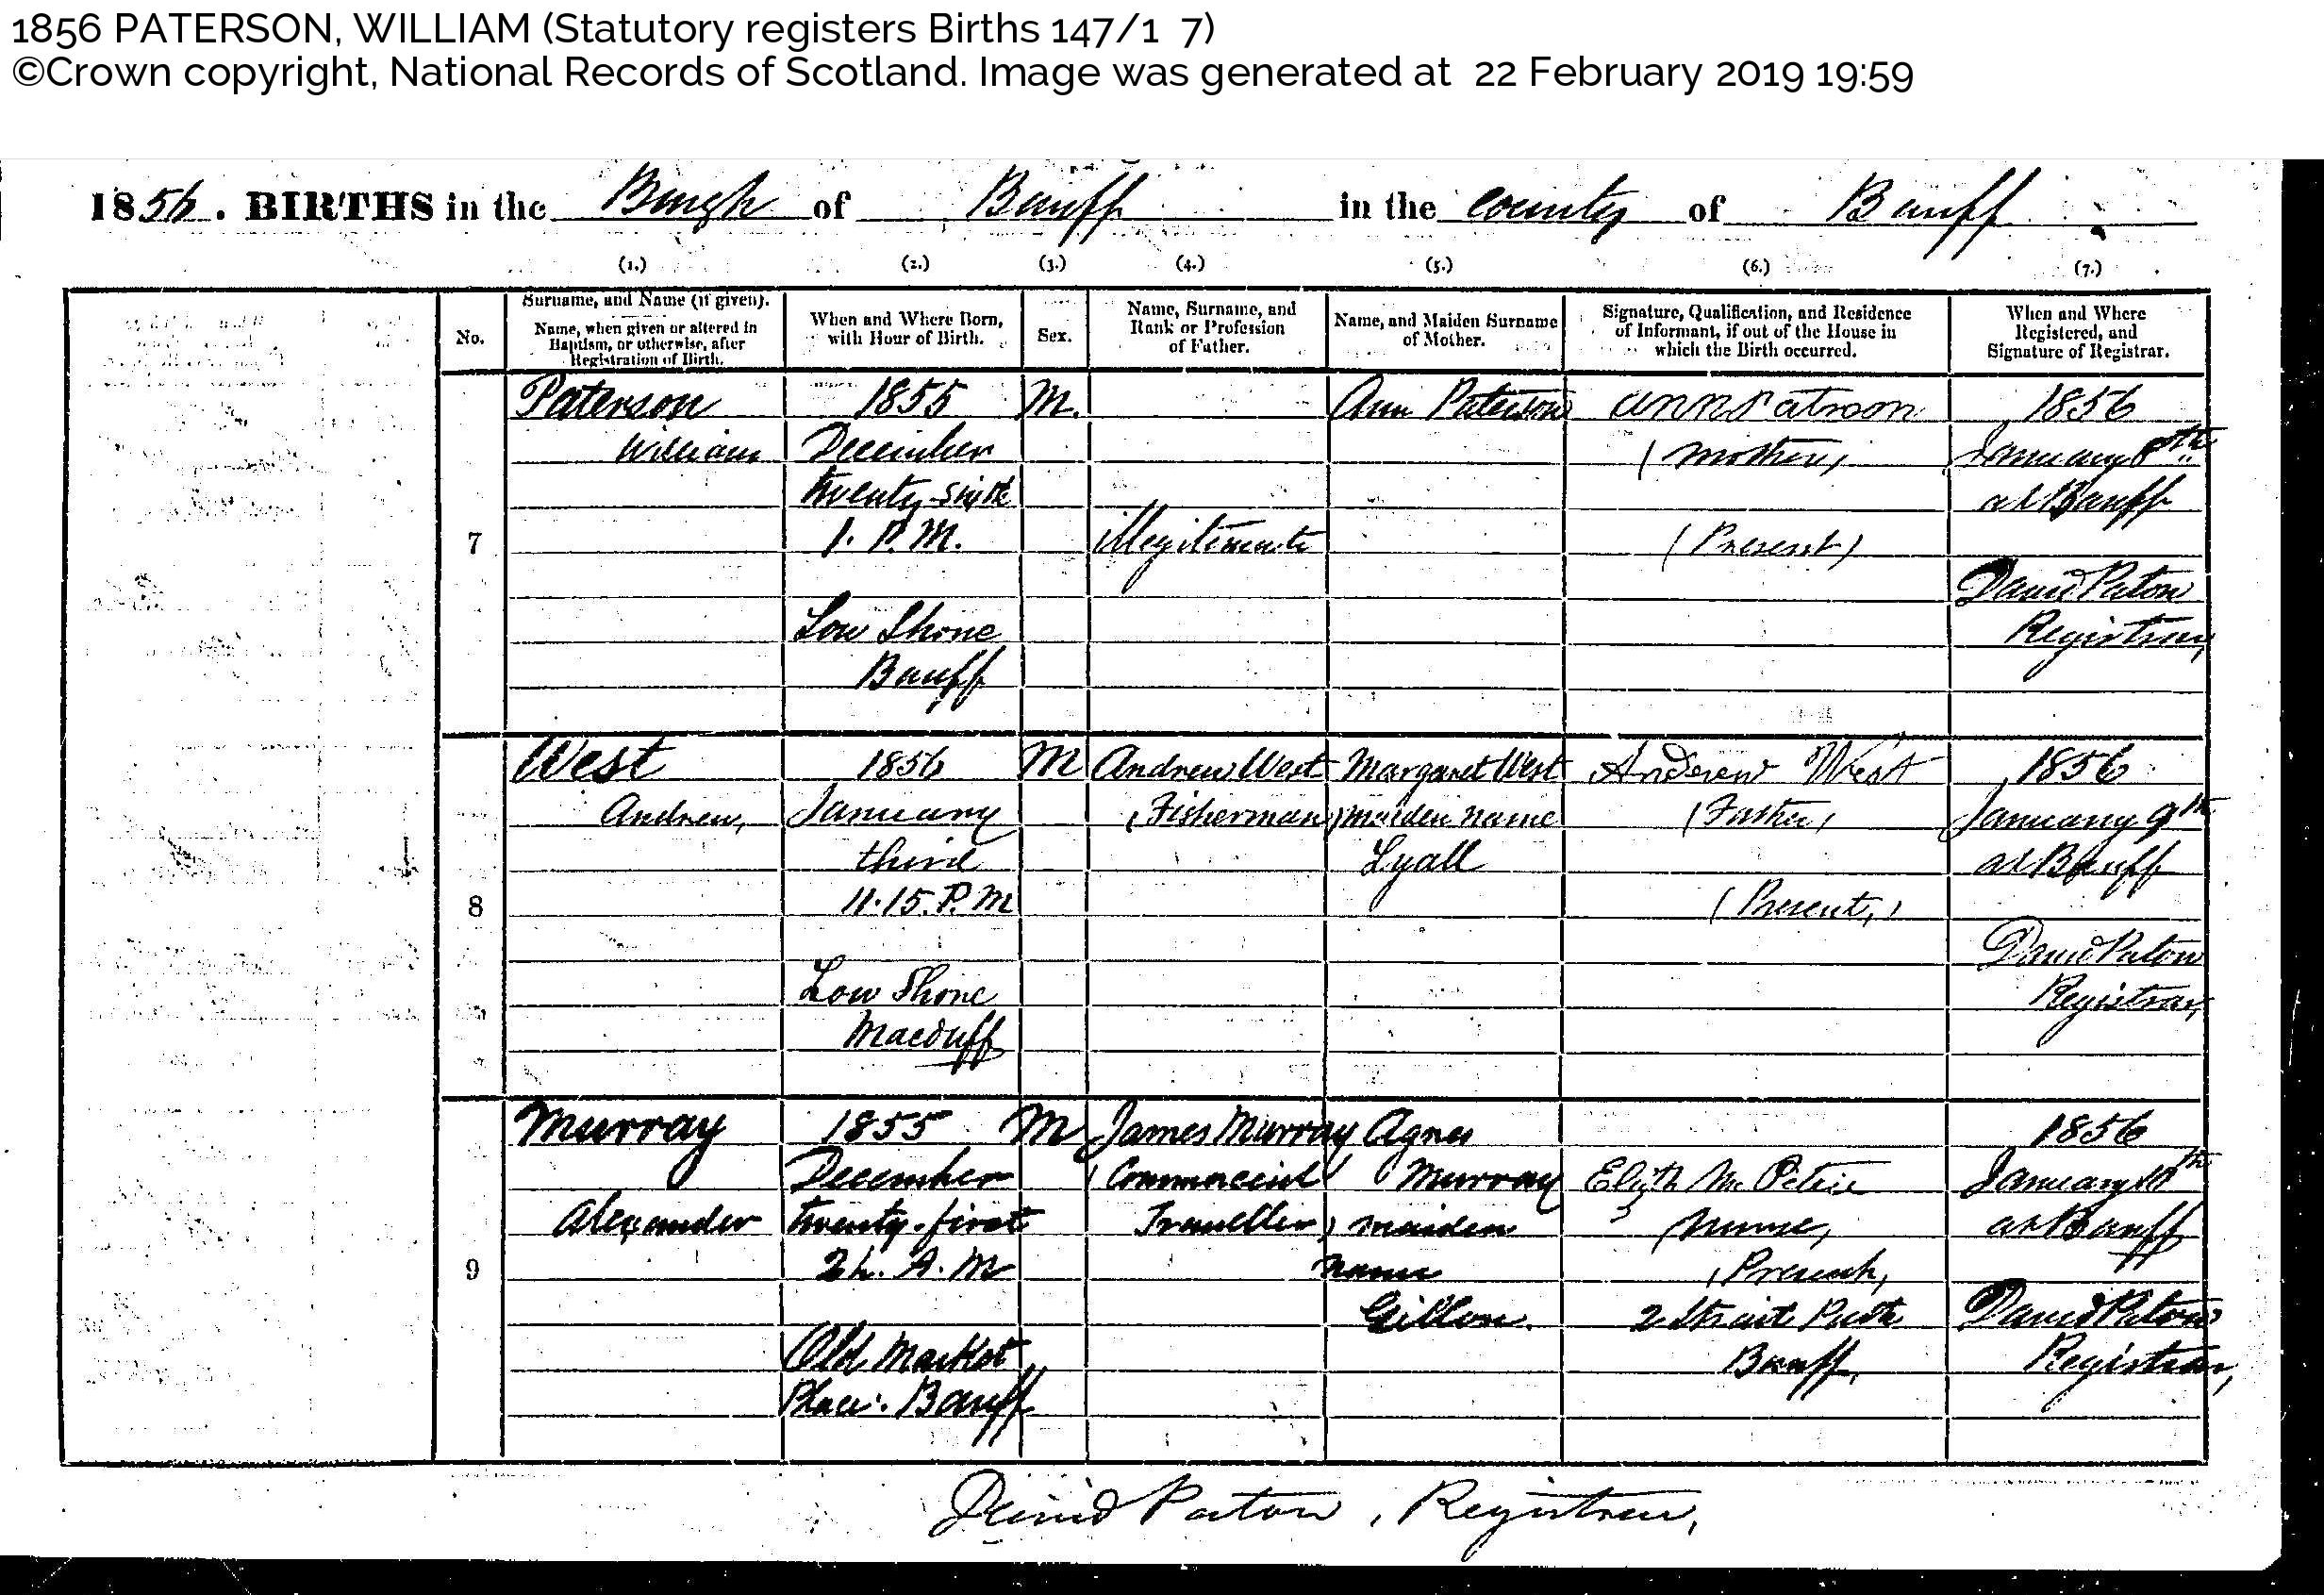 WilliamPaterson_B1855 Low Shore Banff, December 26, 1855